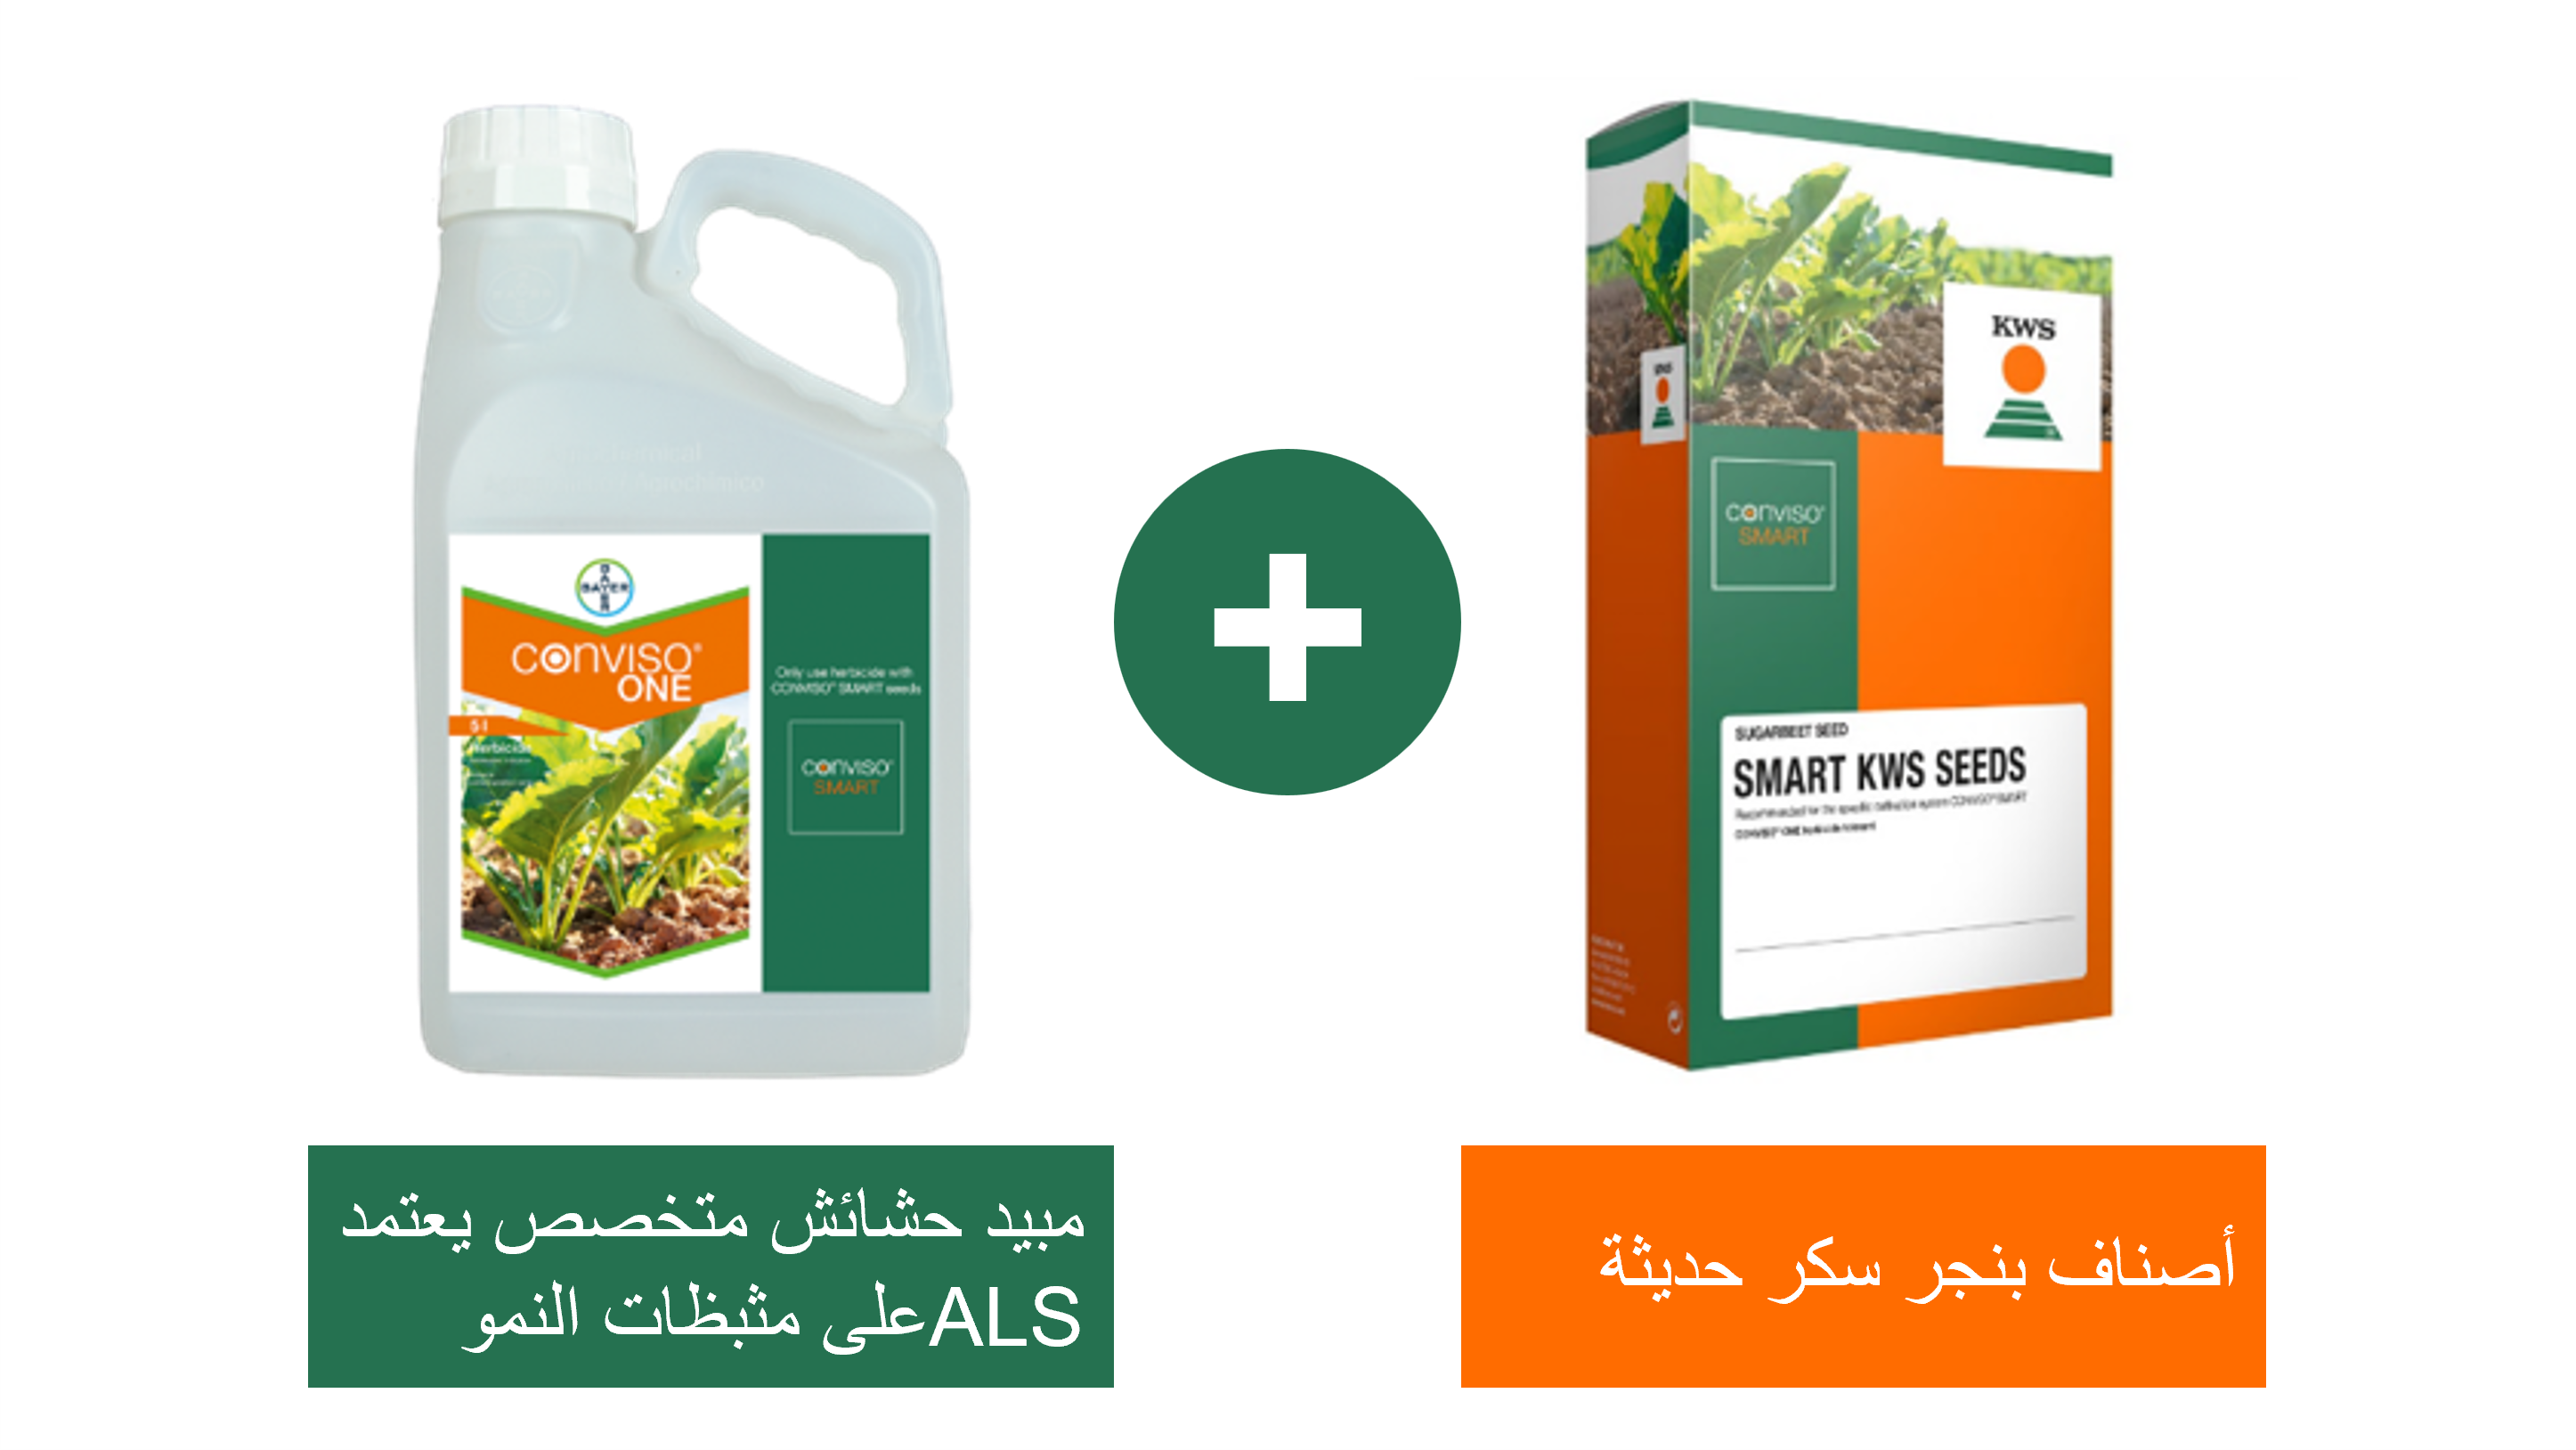 EG_SMART-KWS-seeds_CONVISO-ONE-herbicide.png